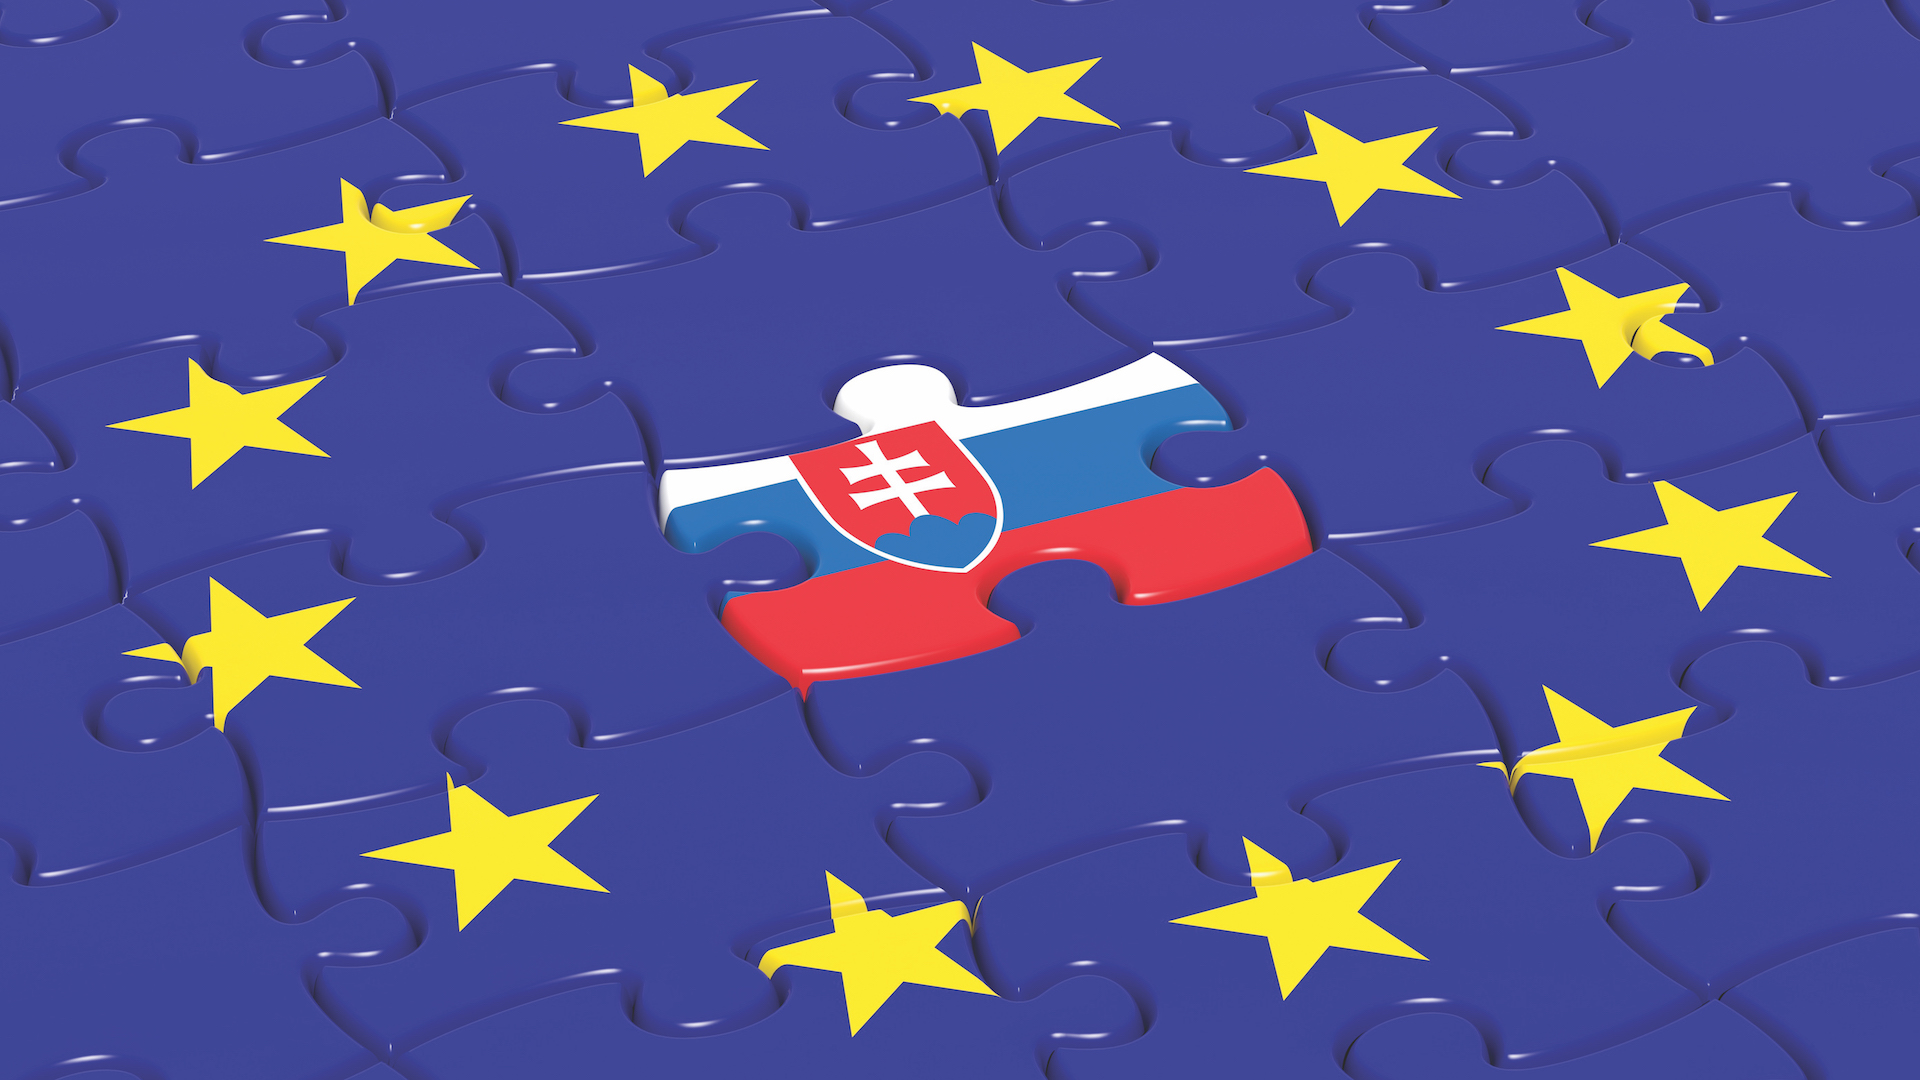 Пазлы флаги. Флаг Словакии. Евро пазлы флаг. Piece Flag. European Union and Russia Flags PNG.